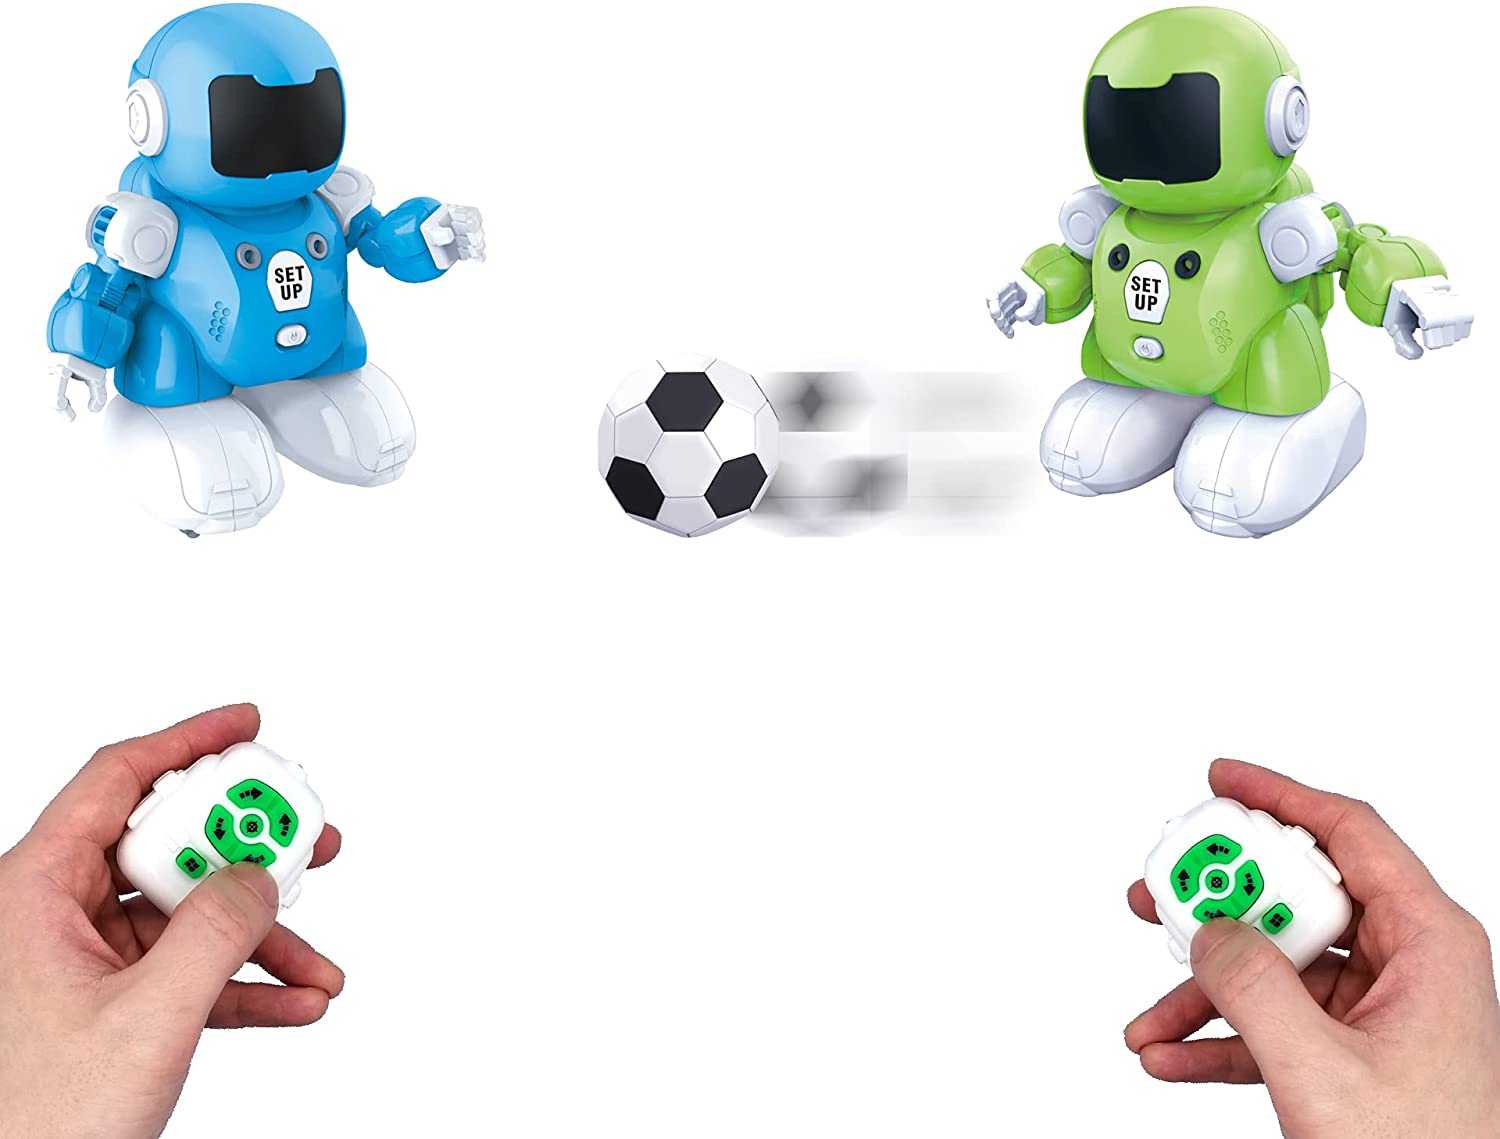 Remote Control Soccer Bot